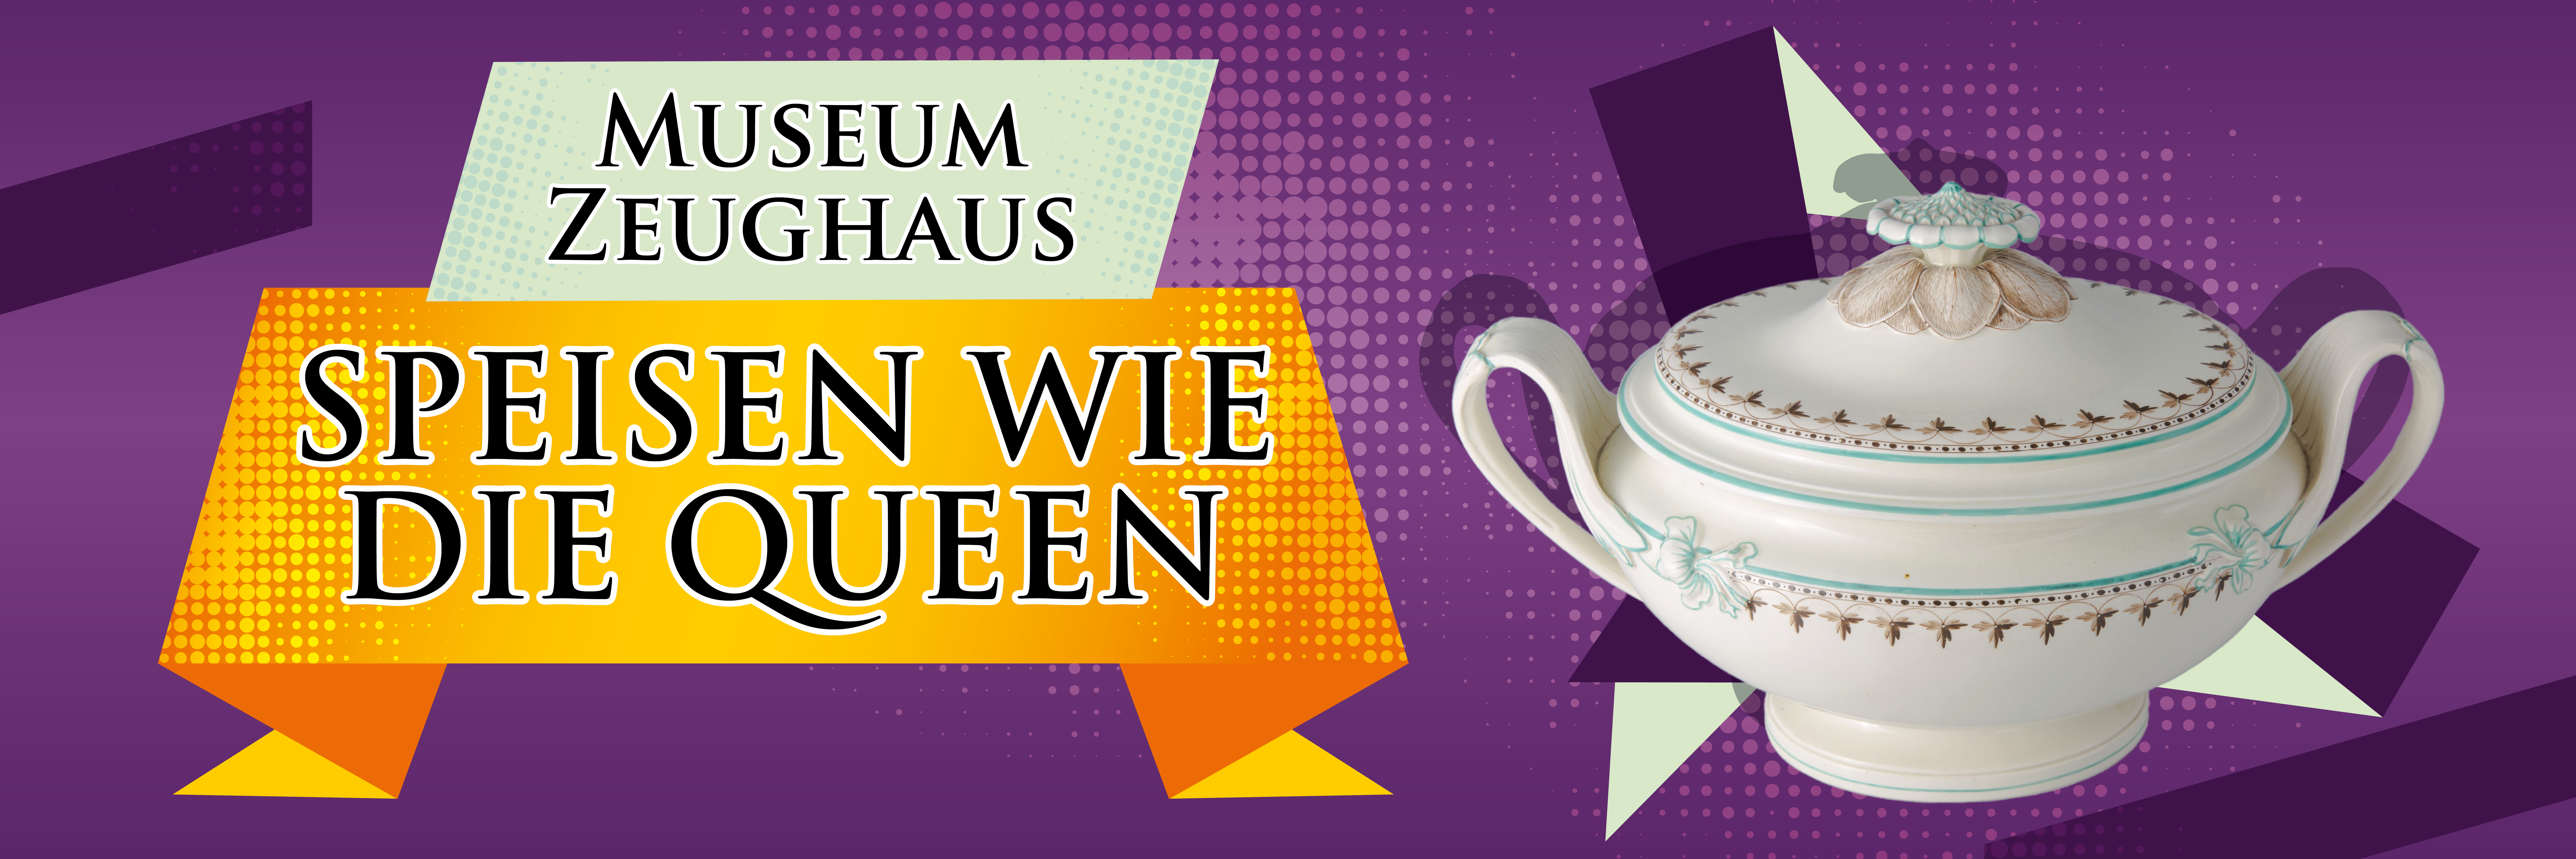 Plakat Museum Zeughaus Speisen wie die Queen